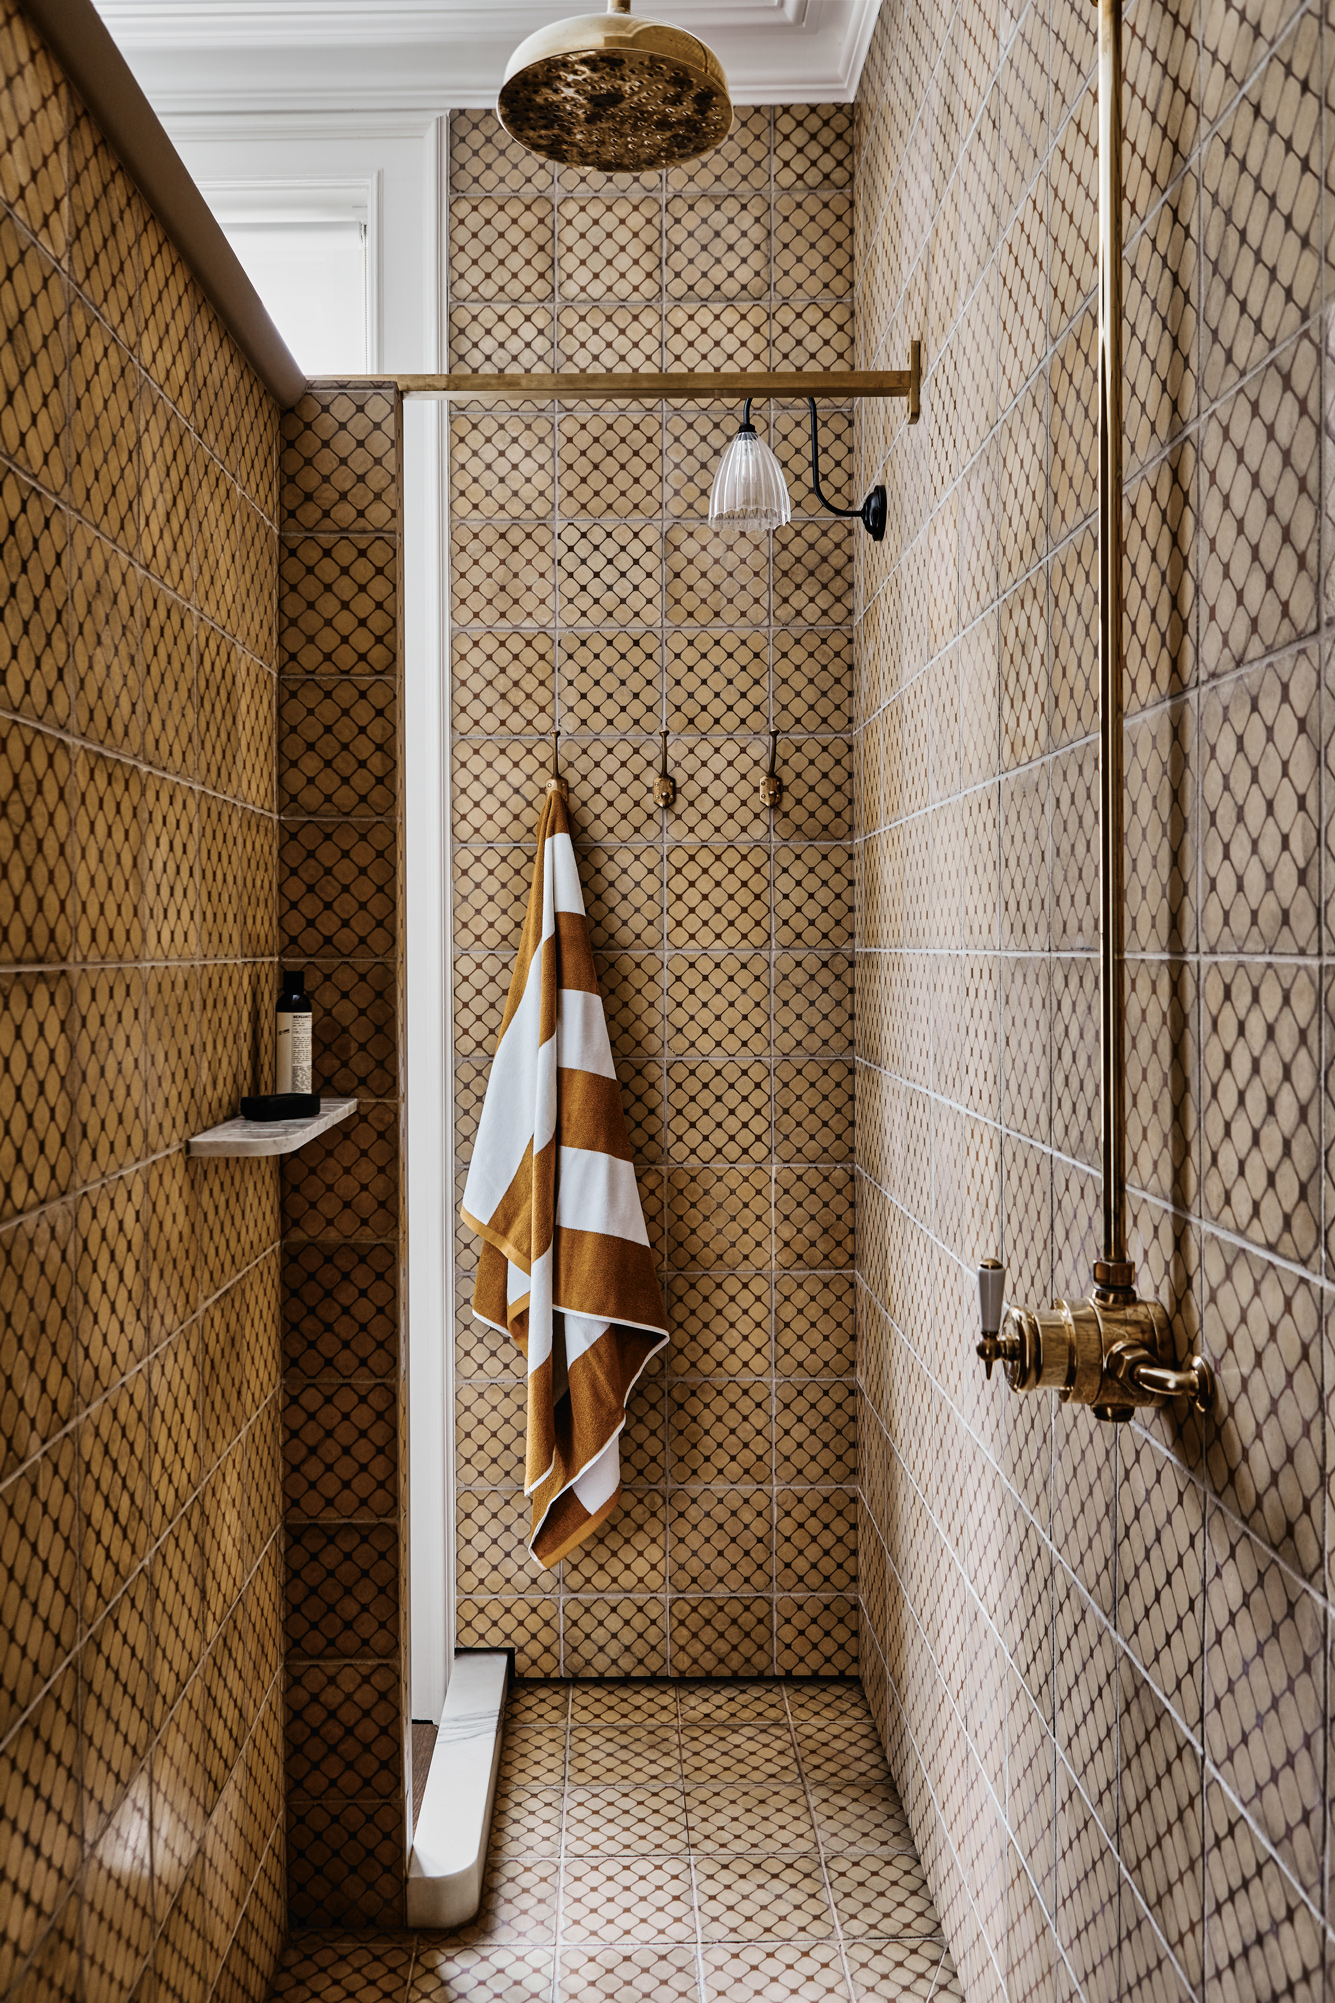 tiled shower, main bathroom, mark lewis design primrose hill house, london. 21